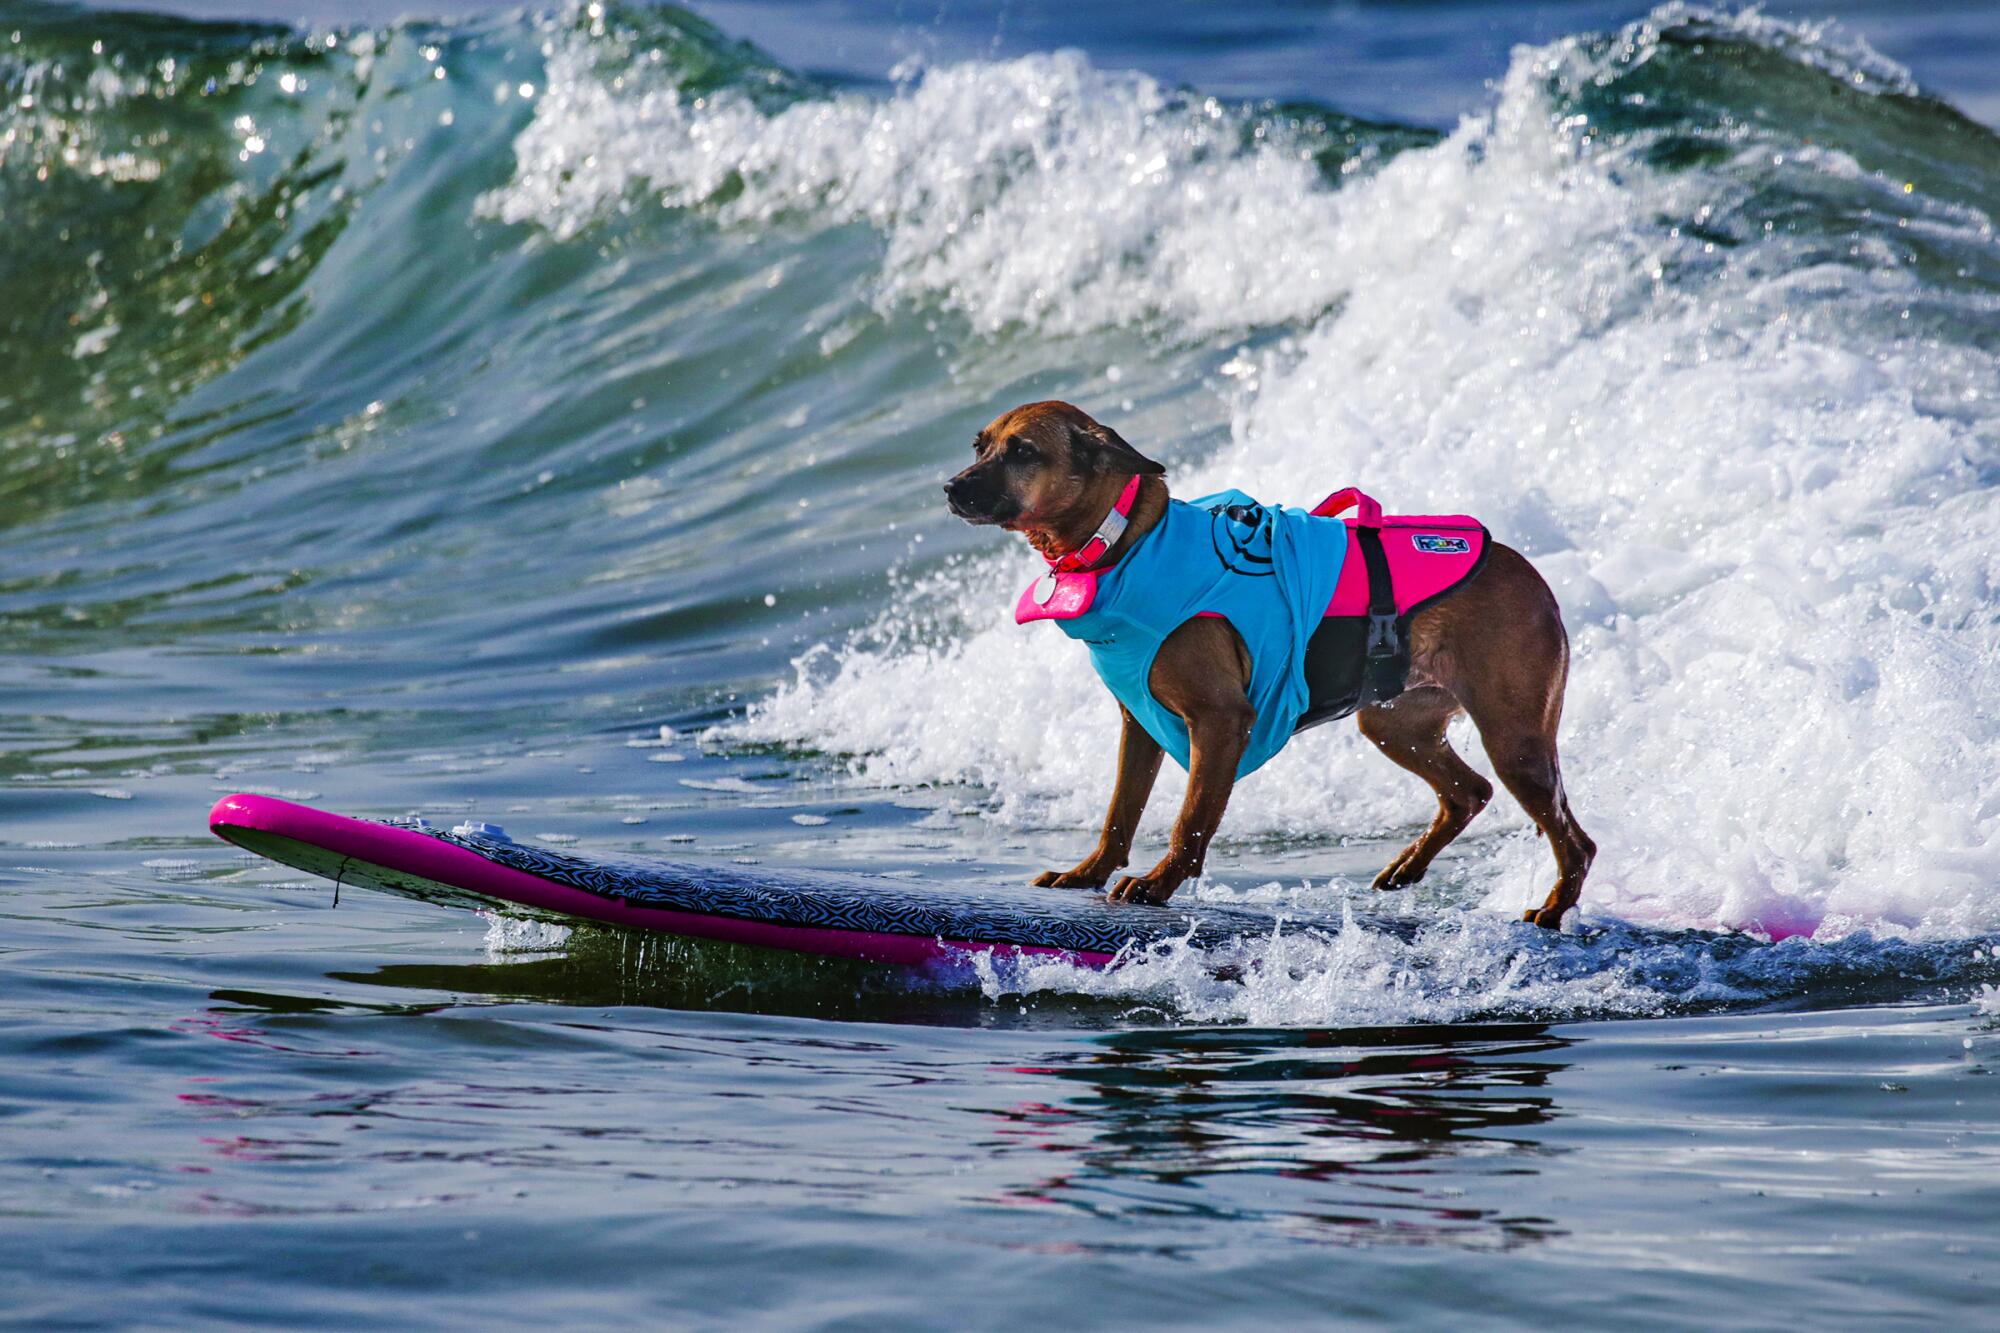 Giselle, a Rhodesian Ridgeback dog, rides a wave 